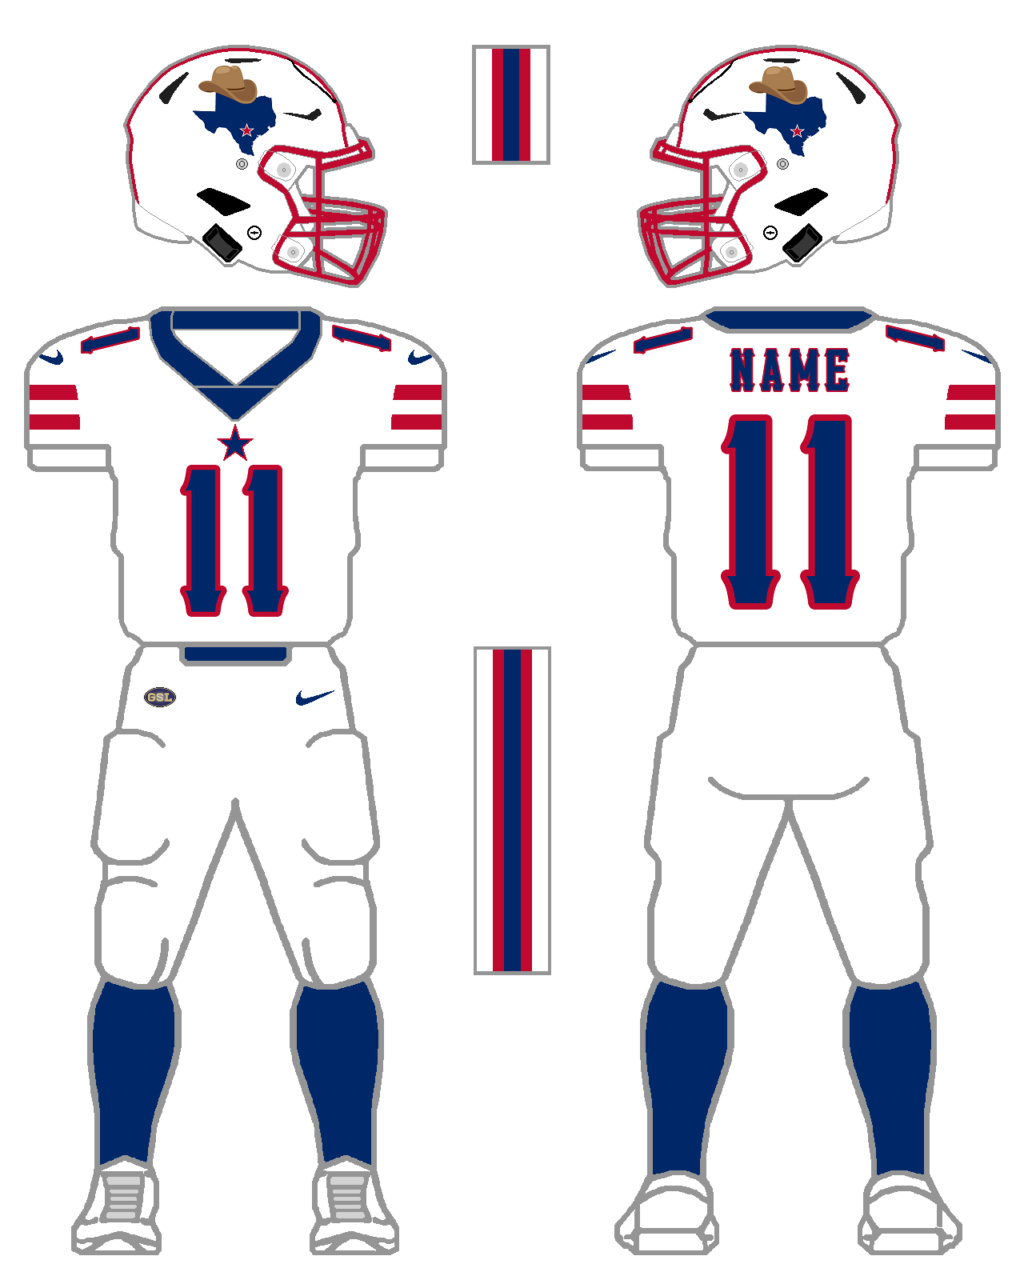 San Antonio's updated uniforms Sa_a310